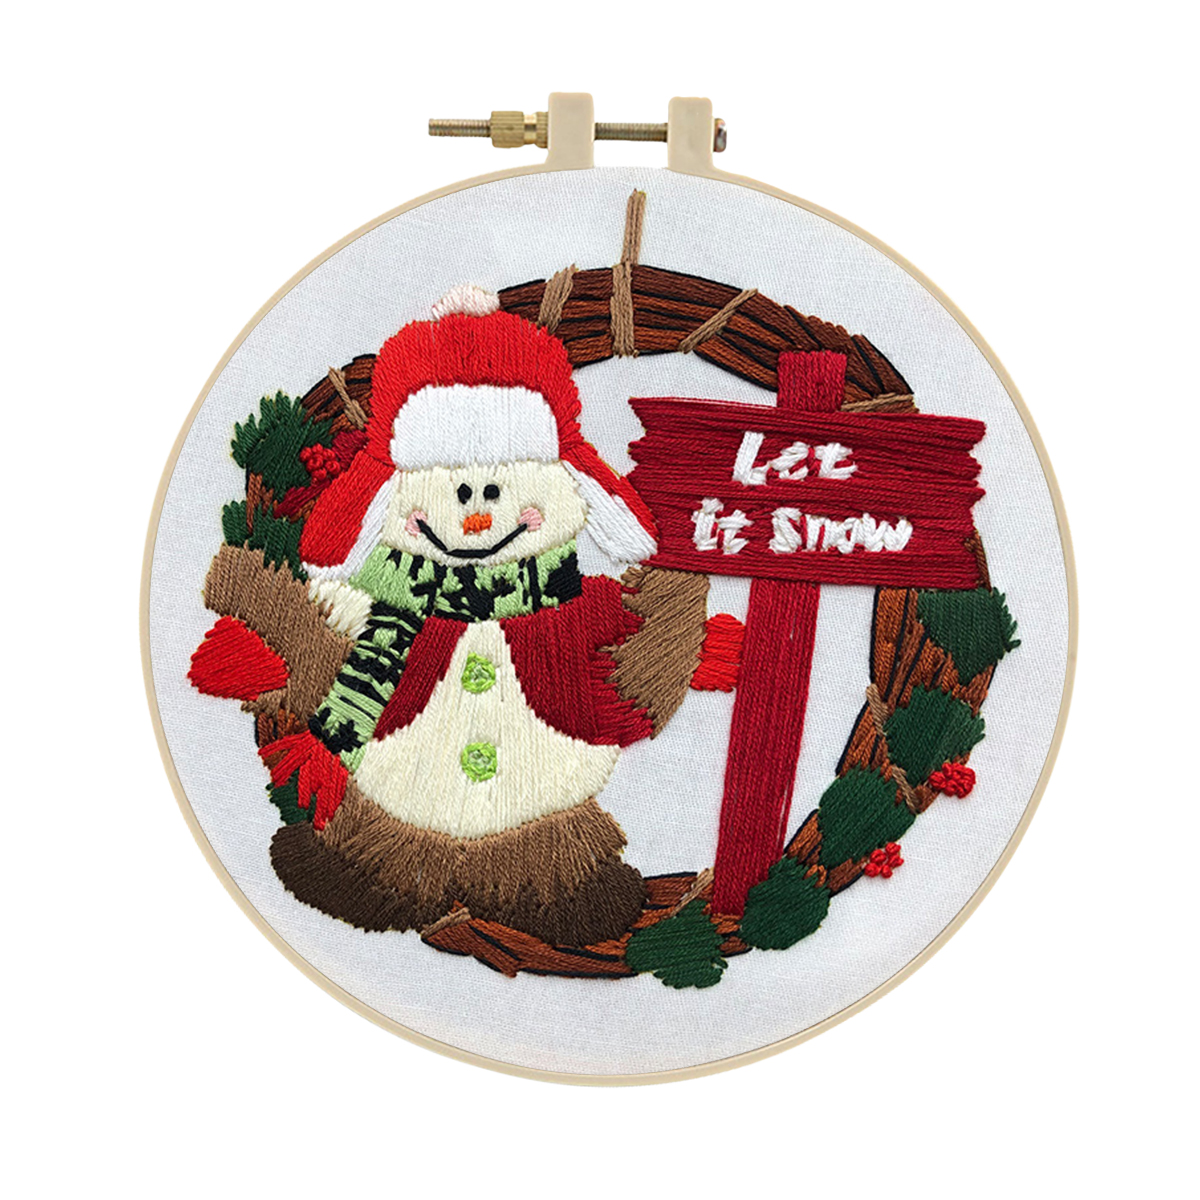 DIY Handmade Christmas Embroidery Kit Craft Cross Stitch Kits Beginner - Lovely Snowman Pattern